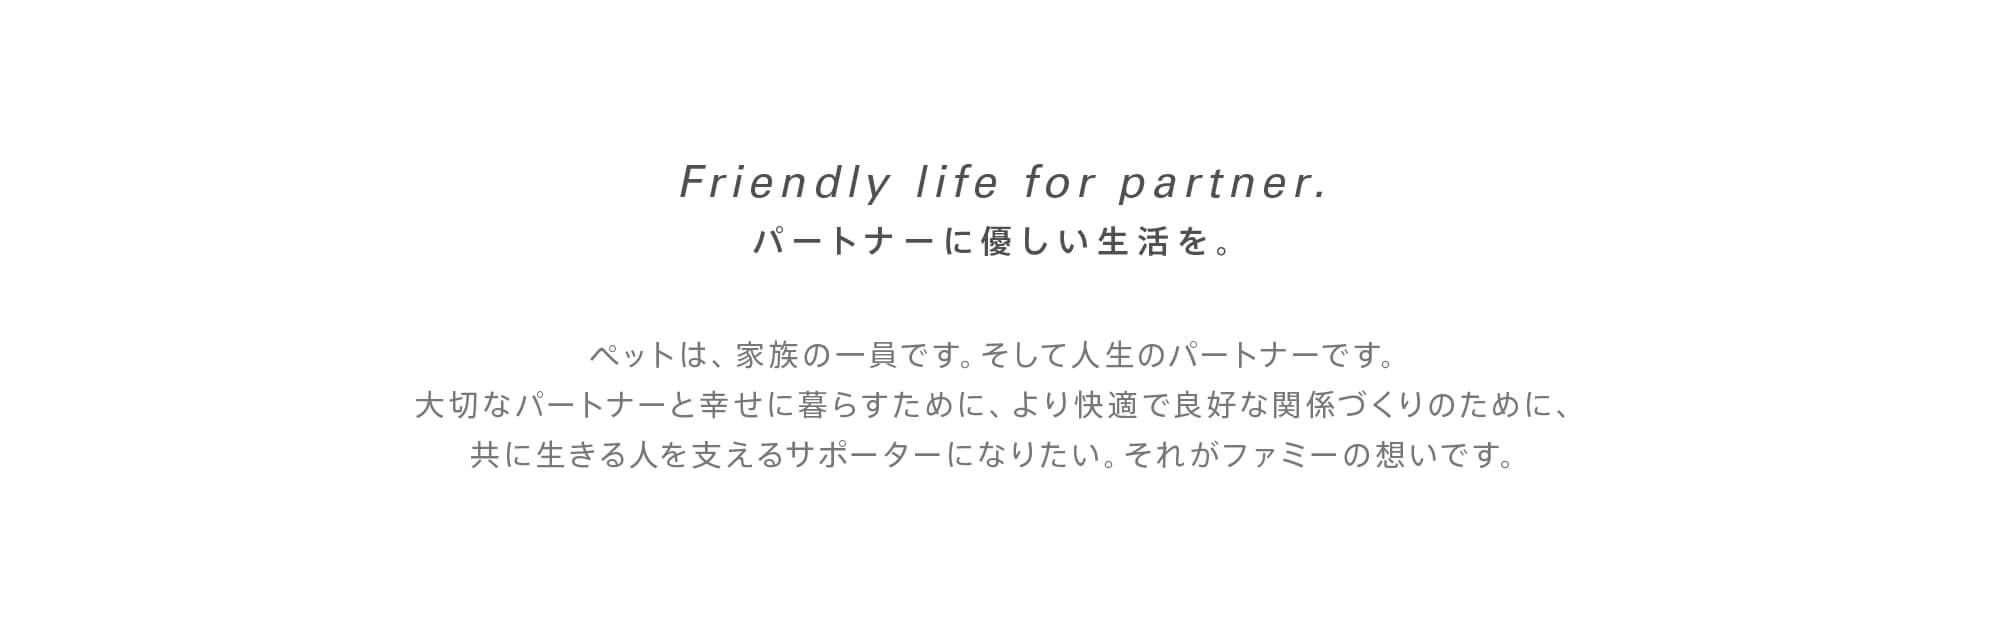 Friendly life for partner.パートナーに優しい生活を。